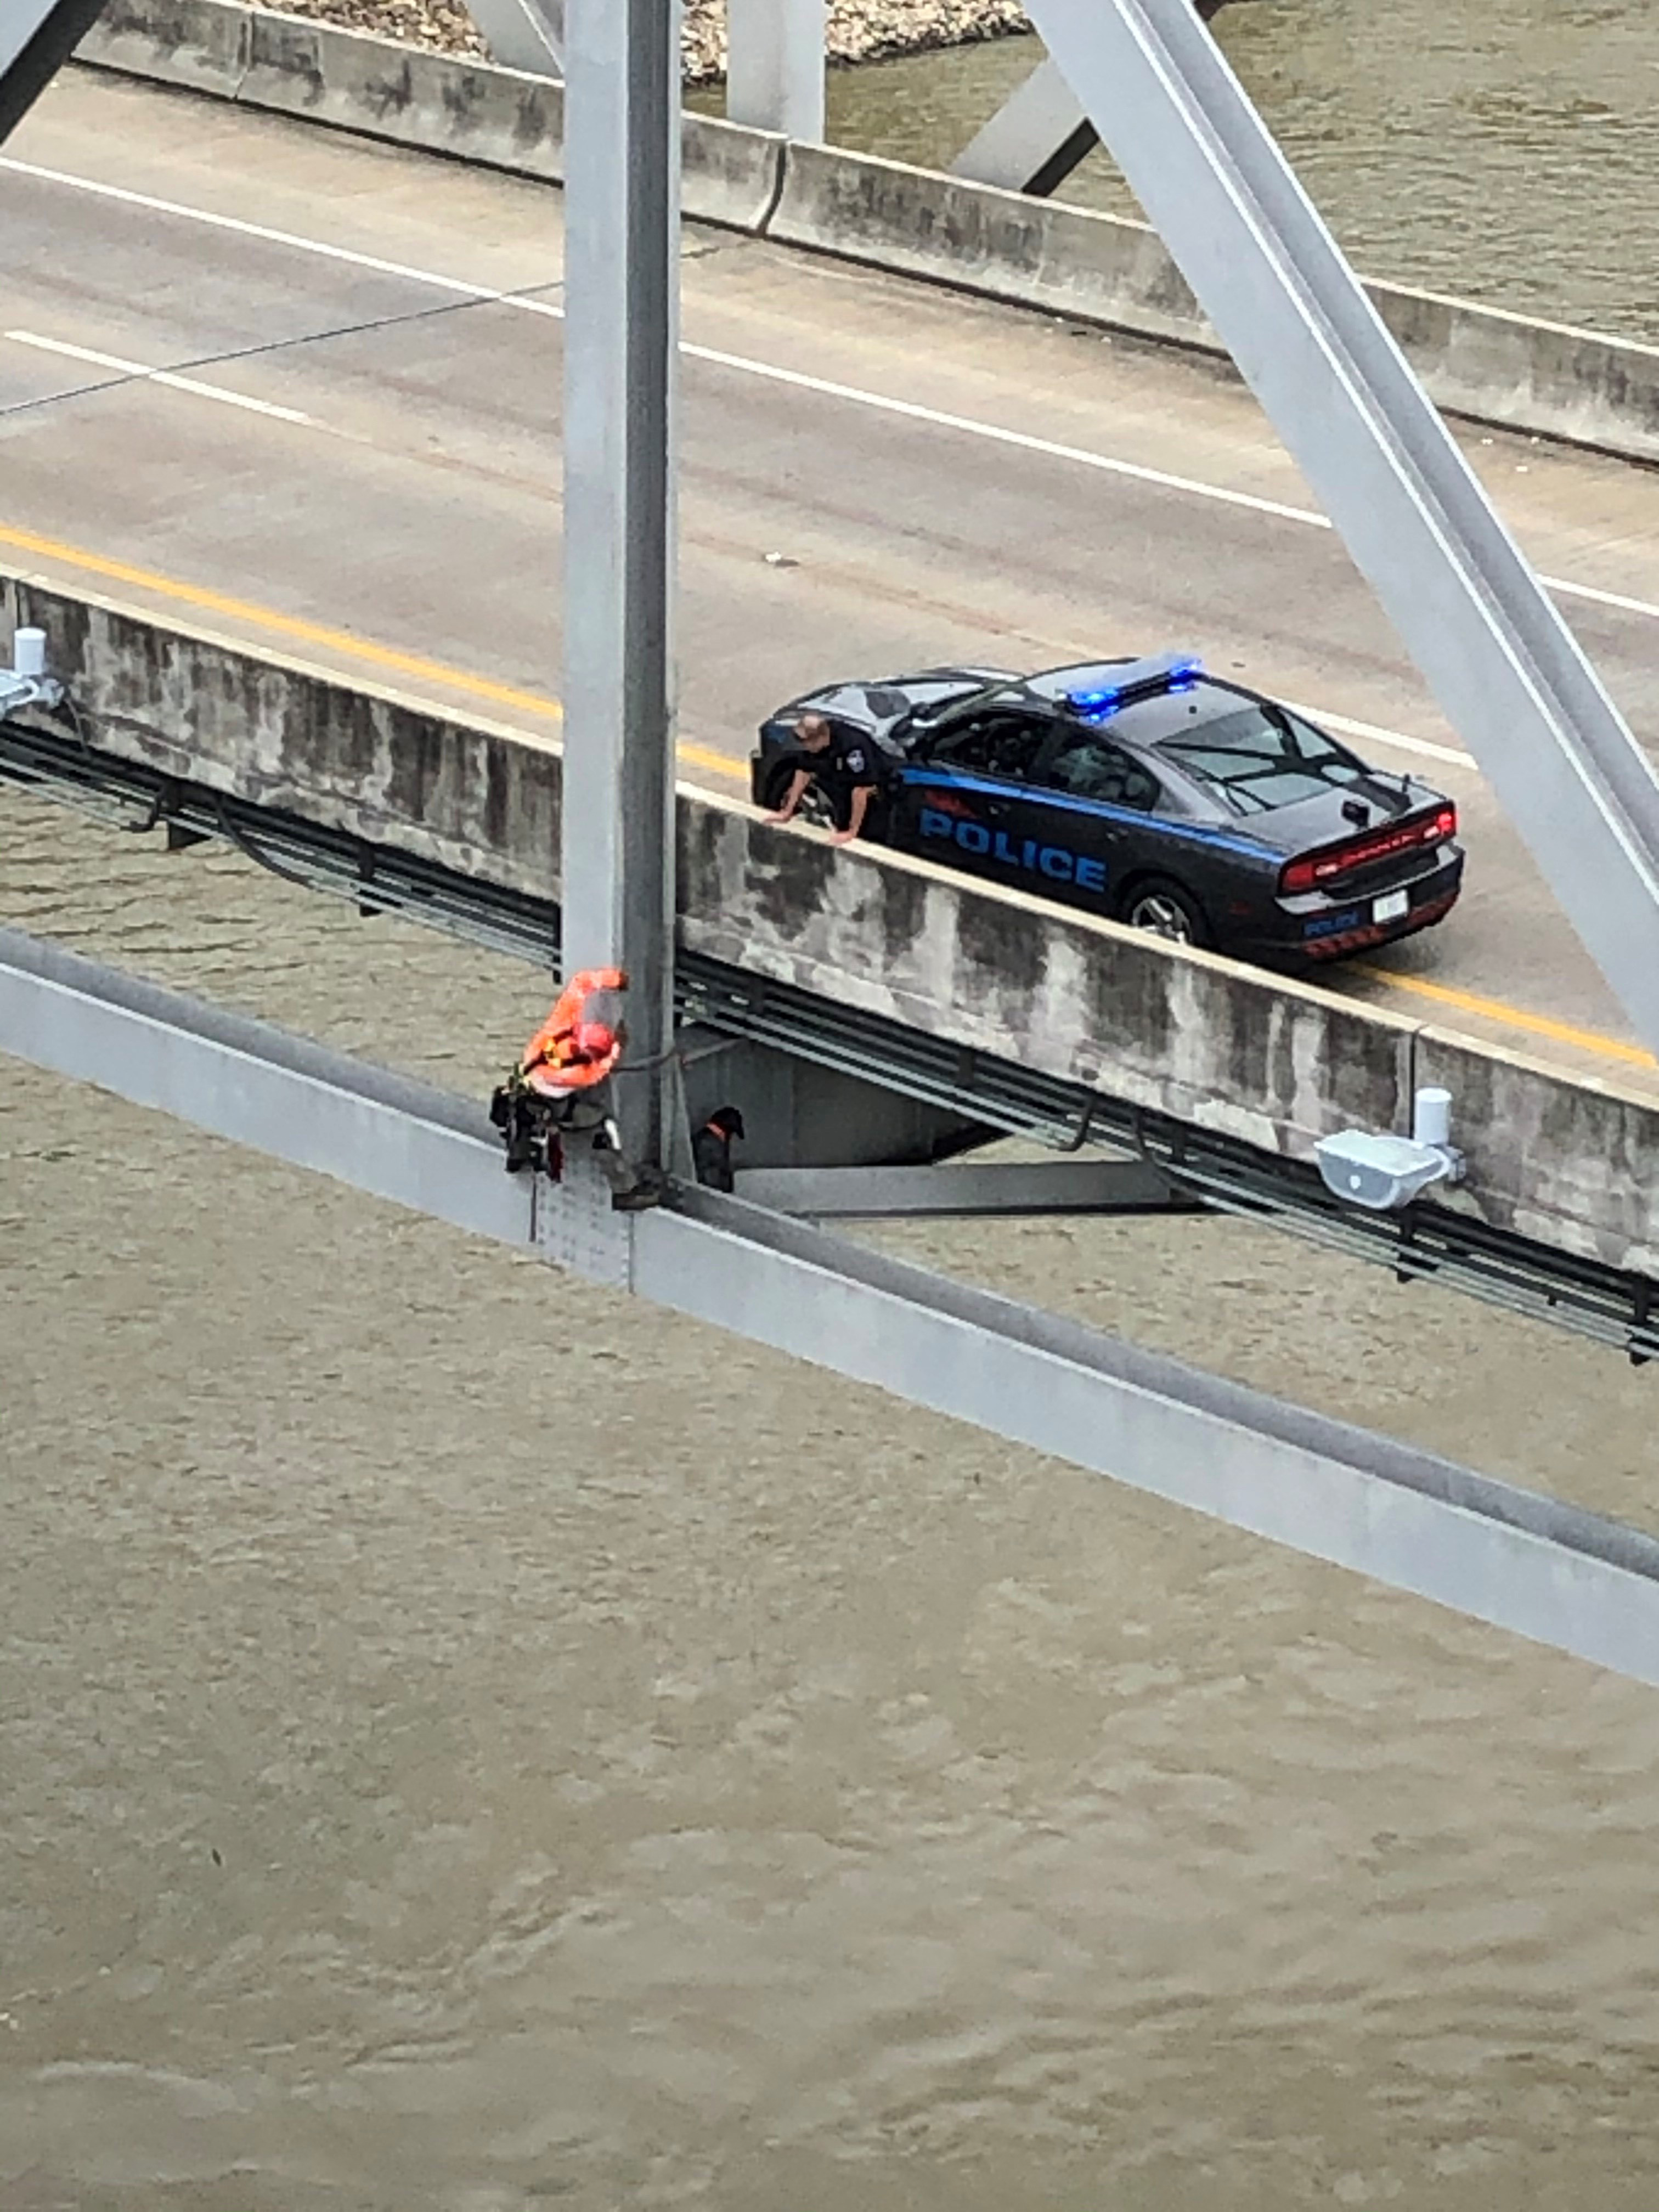 Bridge inspector rescues dog stranded 120 feet above Mississippi River | CNN